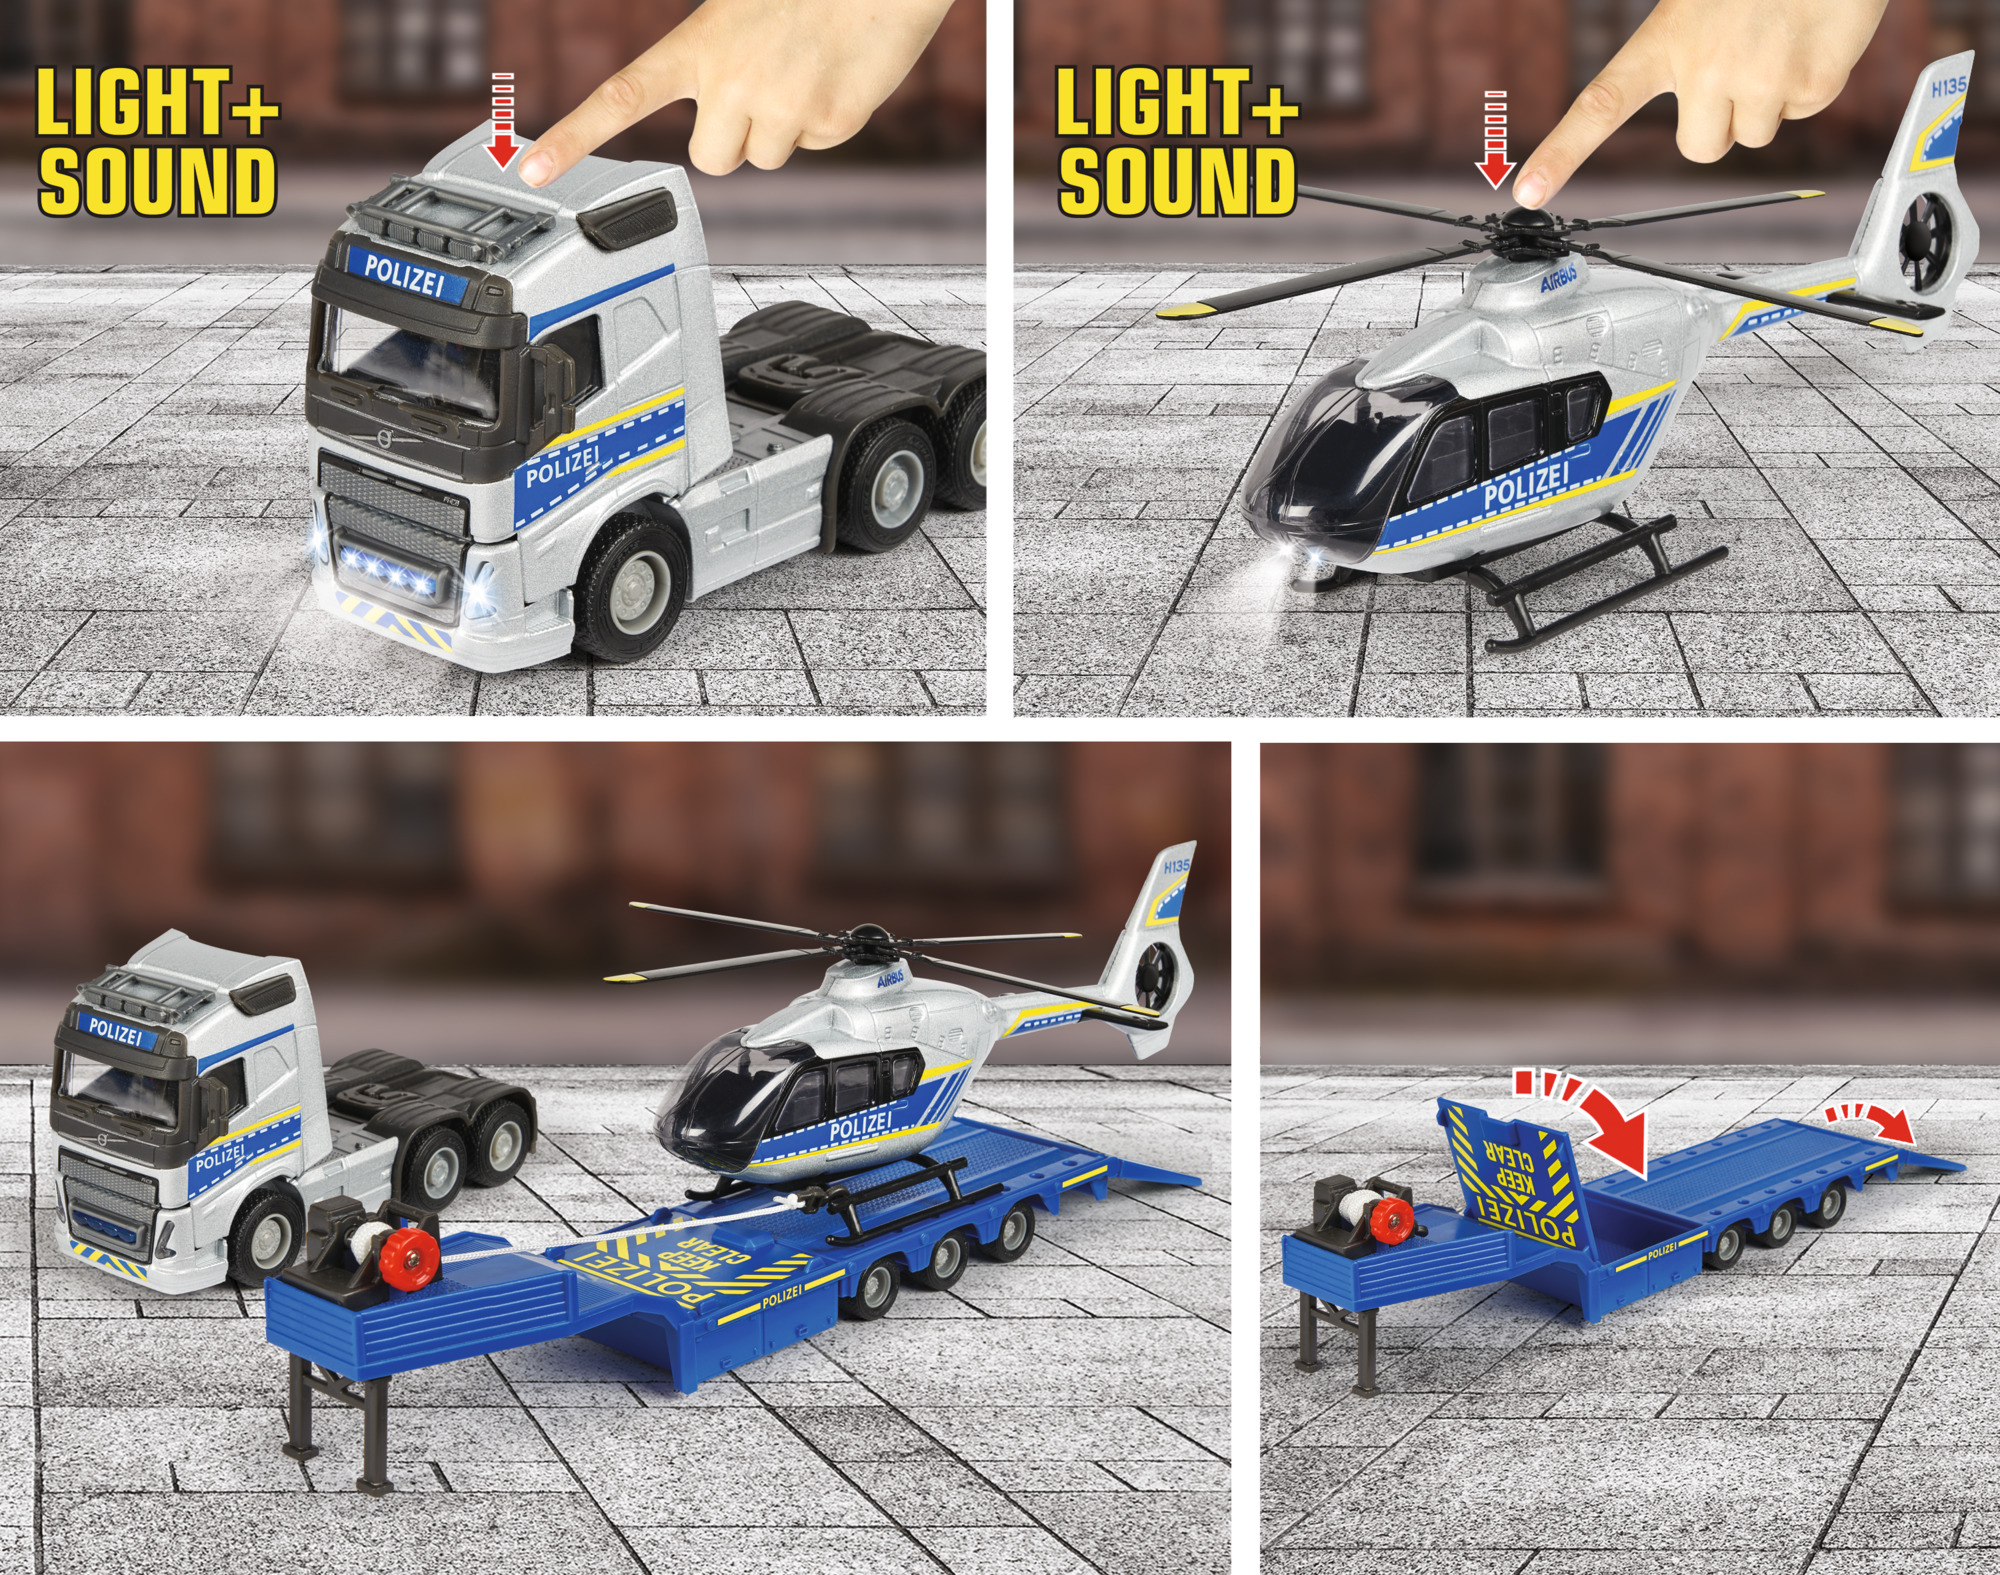 Airbus Police Spielzeugauto Mehrfarbig Volvo Helicopter + Truck MAJORETTE